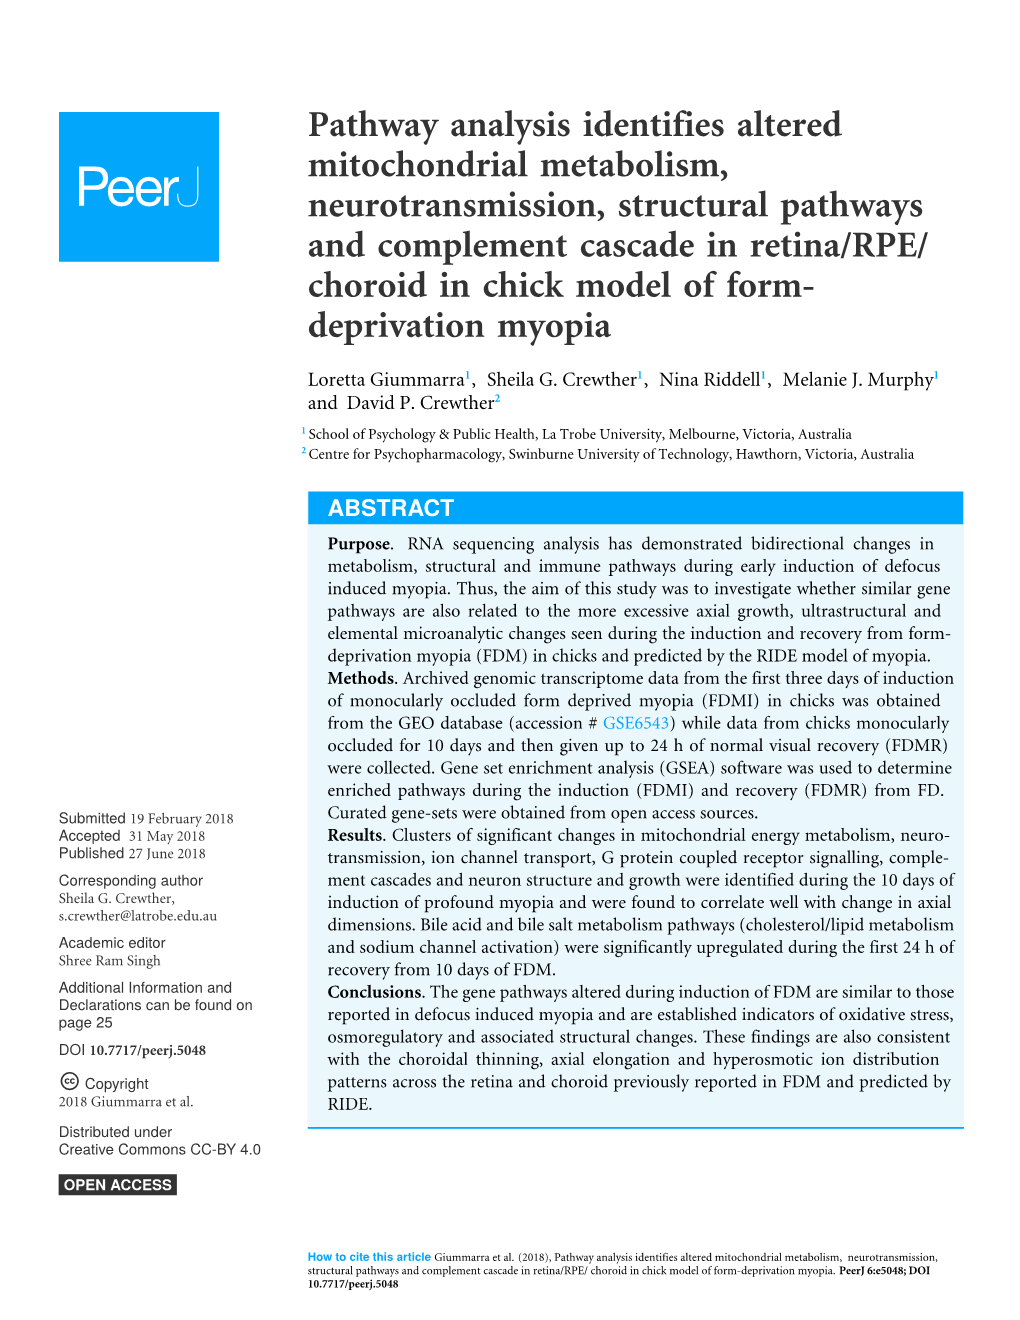 Pathway Analysis Identifies Altered Mitochondrial Metabolism